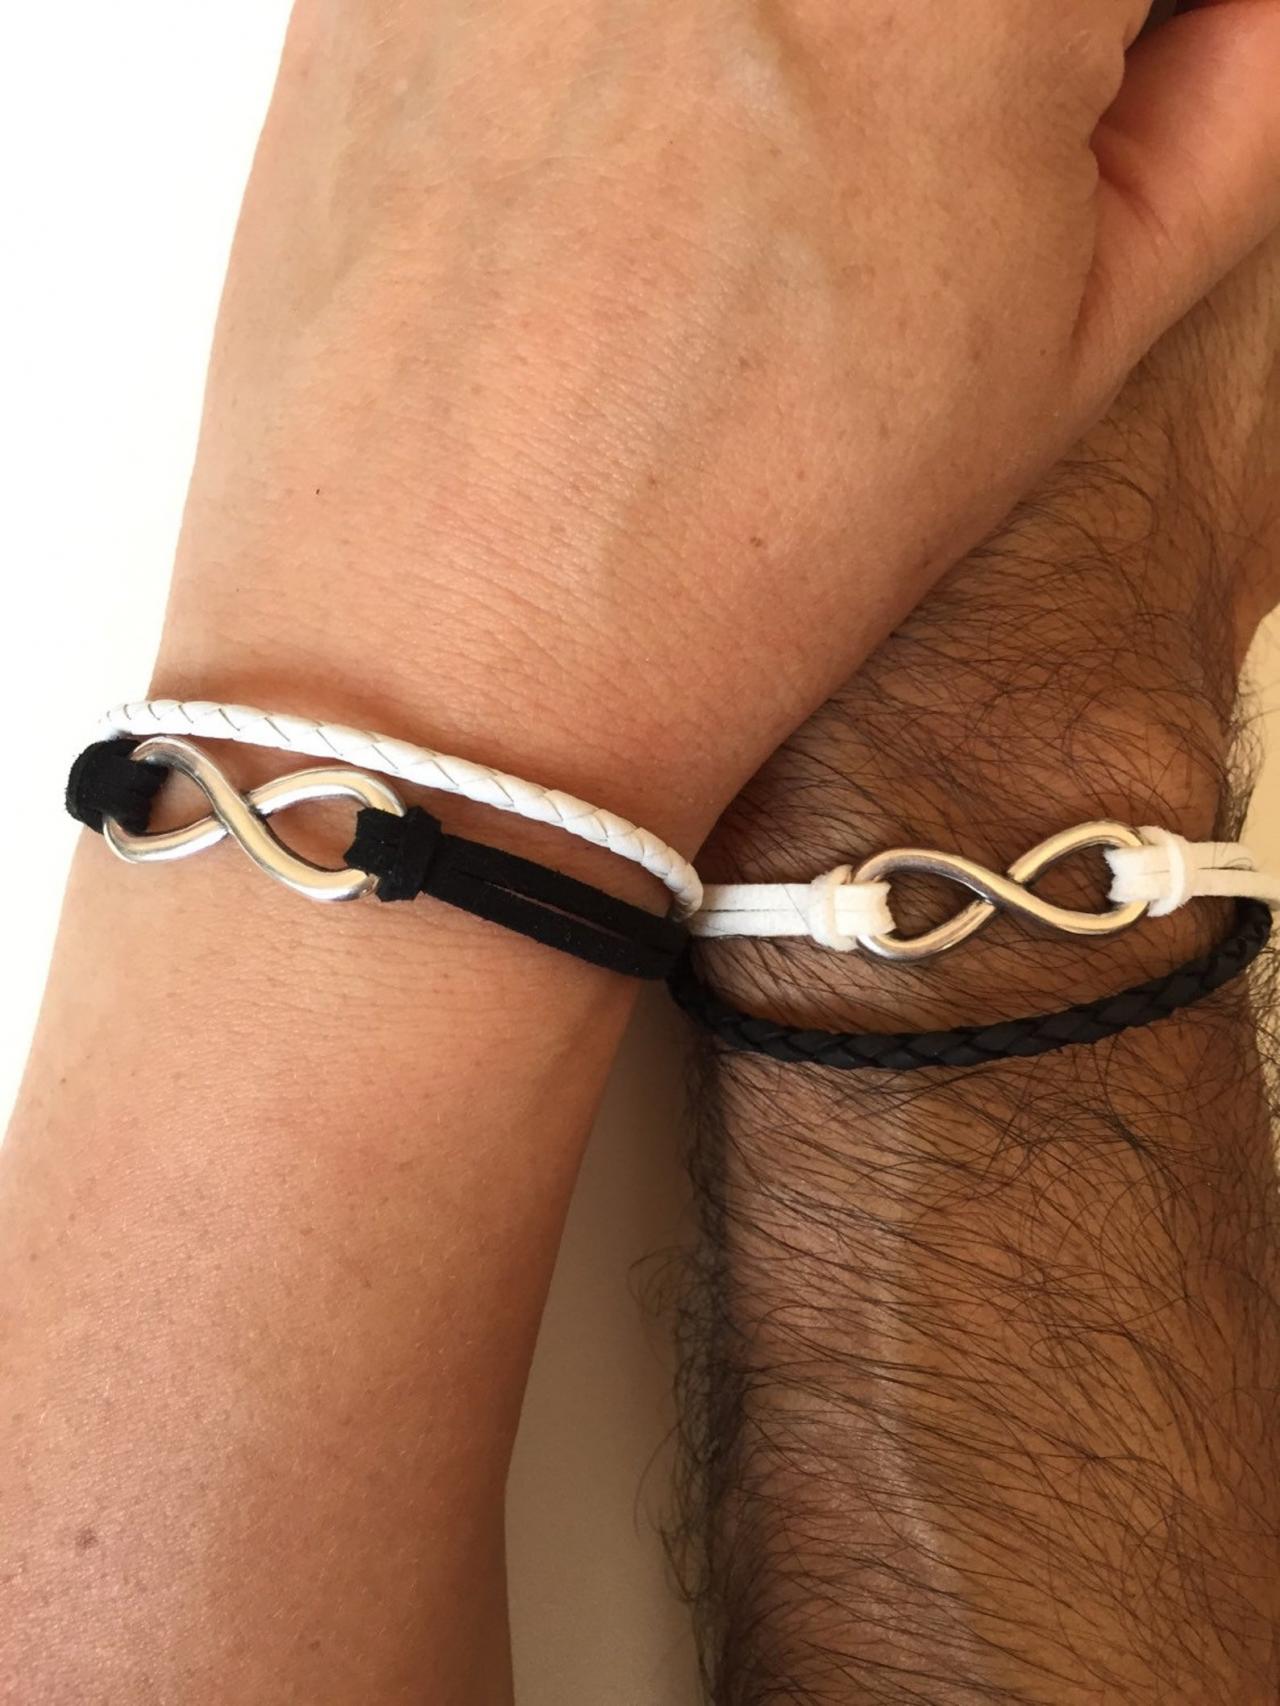 Couples Bracelets 245- friendship love cuff infinity yin and yang bracelet leather braid gift boyfriend girlfriend